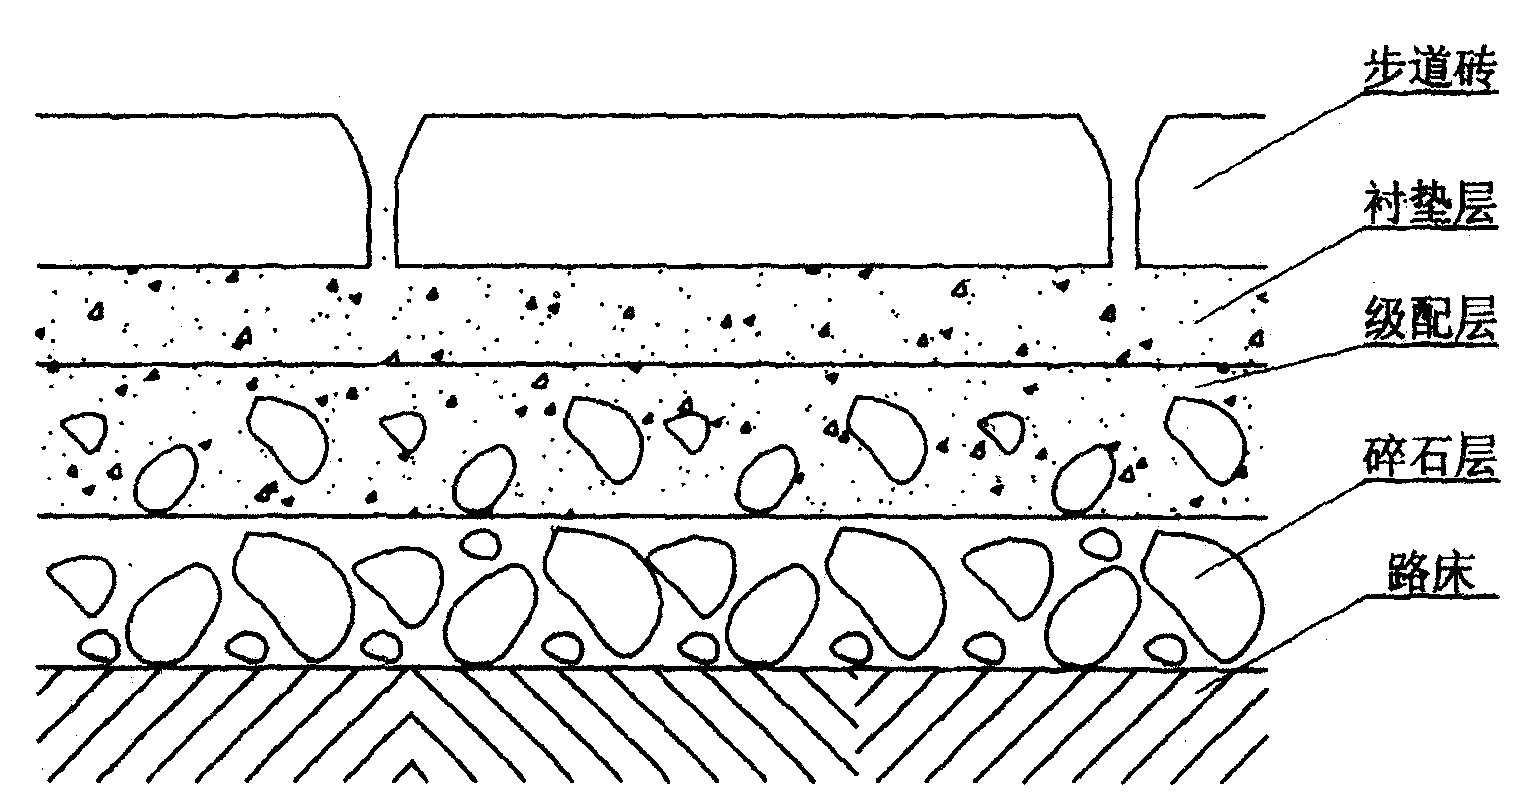 Porous brickwalk laying method